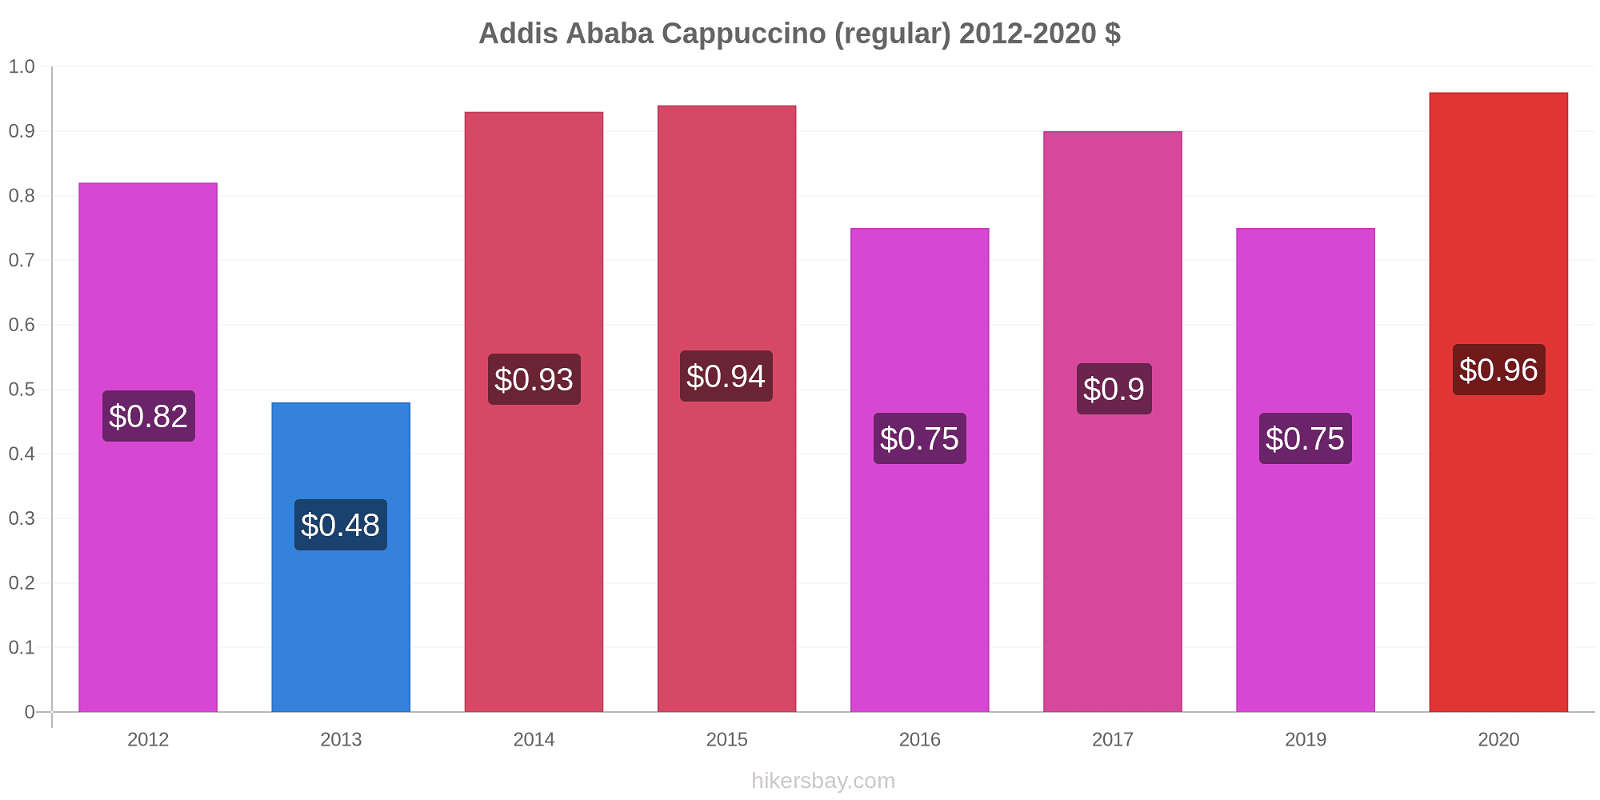 Addis Ababa price changes Cappuccino (regular) hikersbay.com